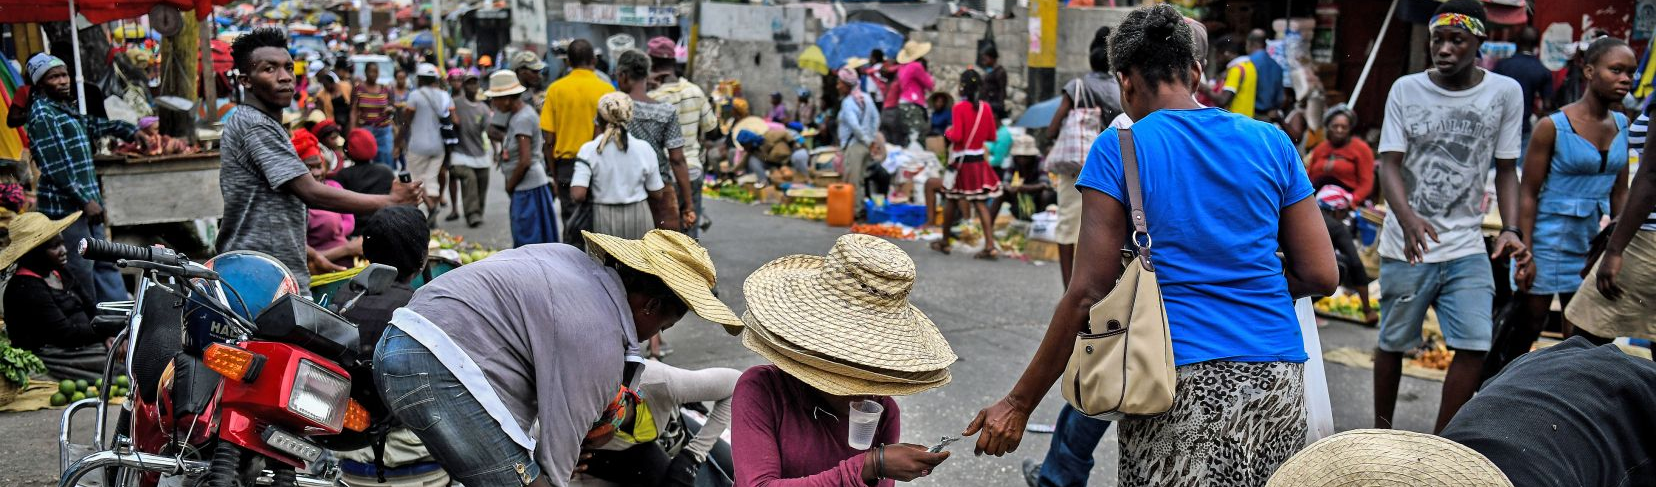 “Ayiti paka respire”: A mulher haitiana na pandemia, outra expressão de terror a enfrentar